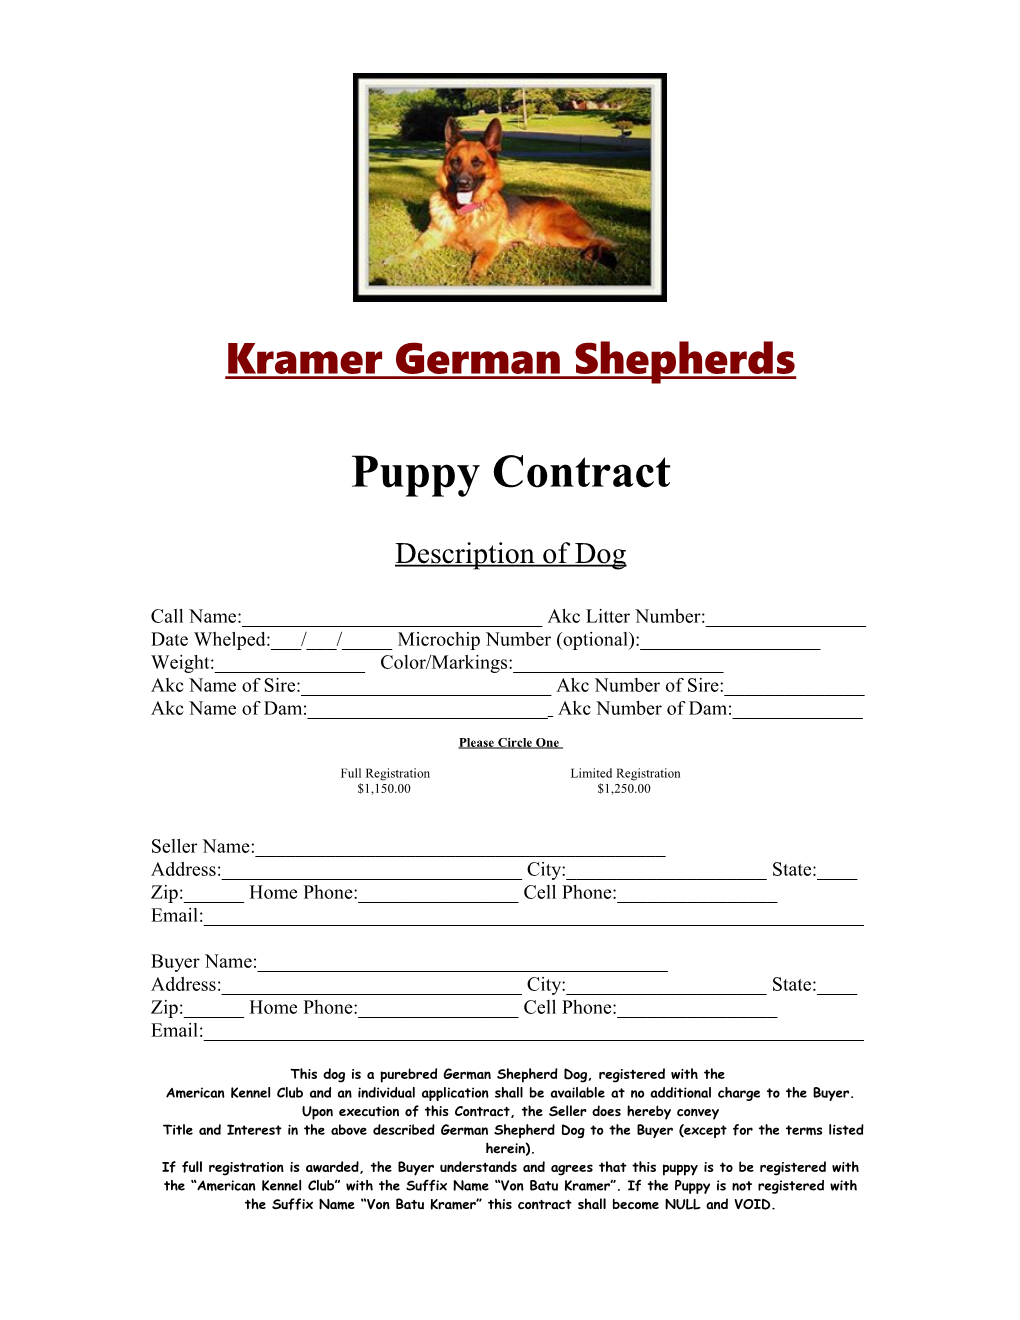 Kramer German Shepherds